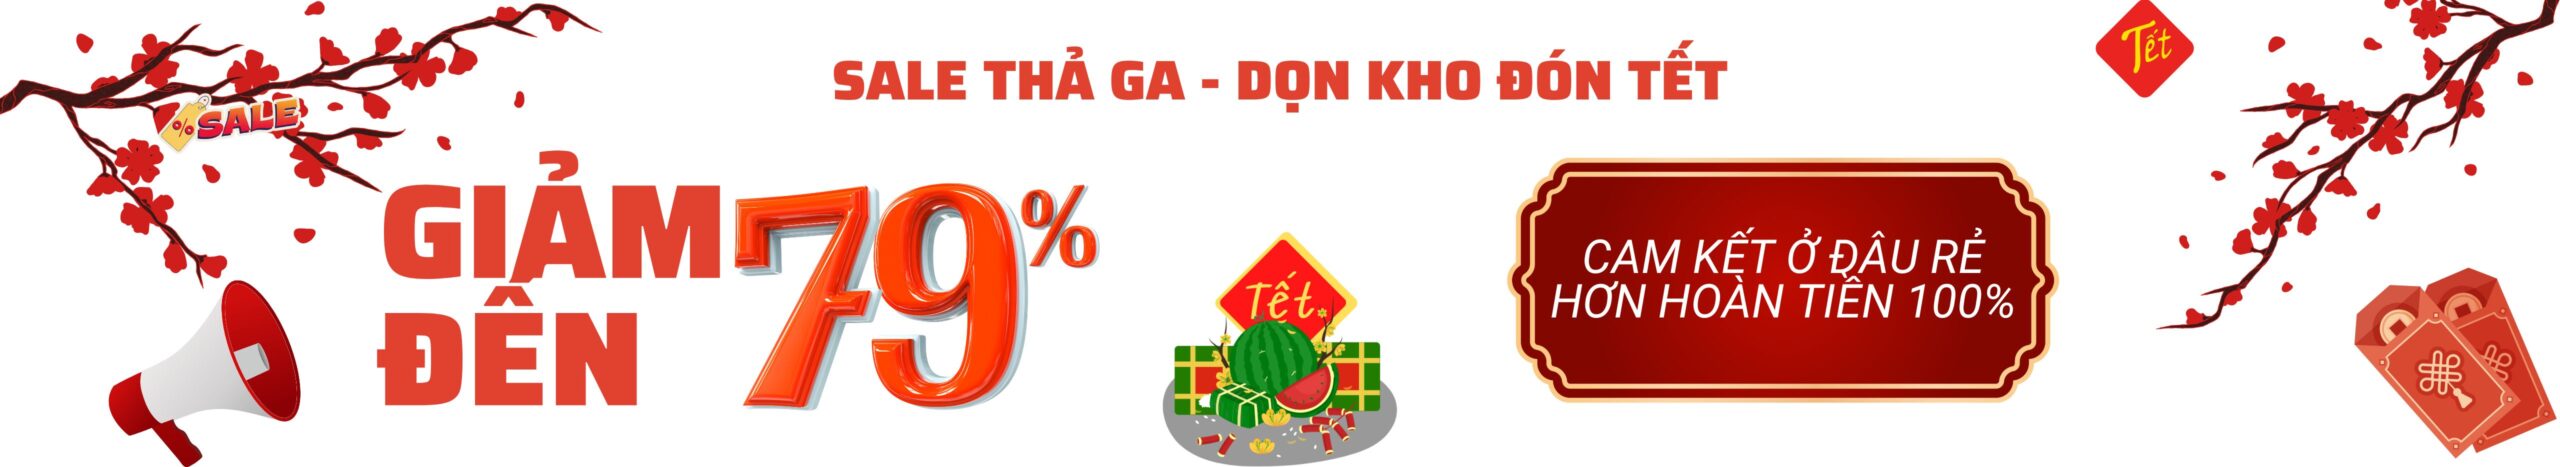 Tet Sale Don Kho